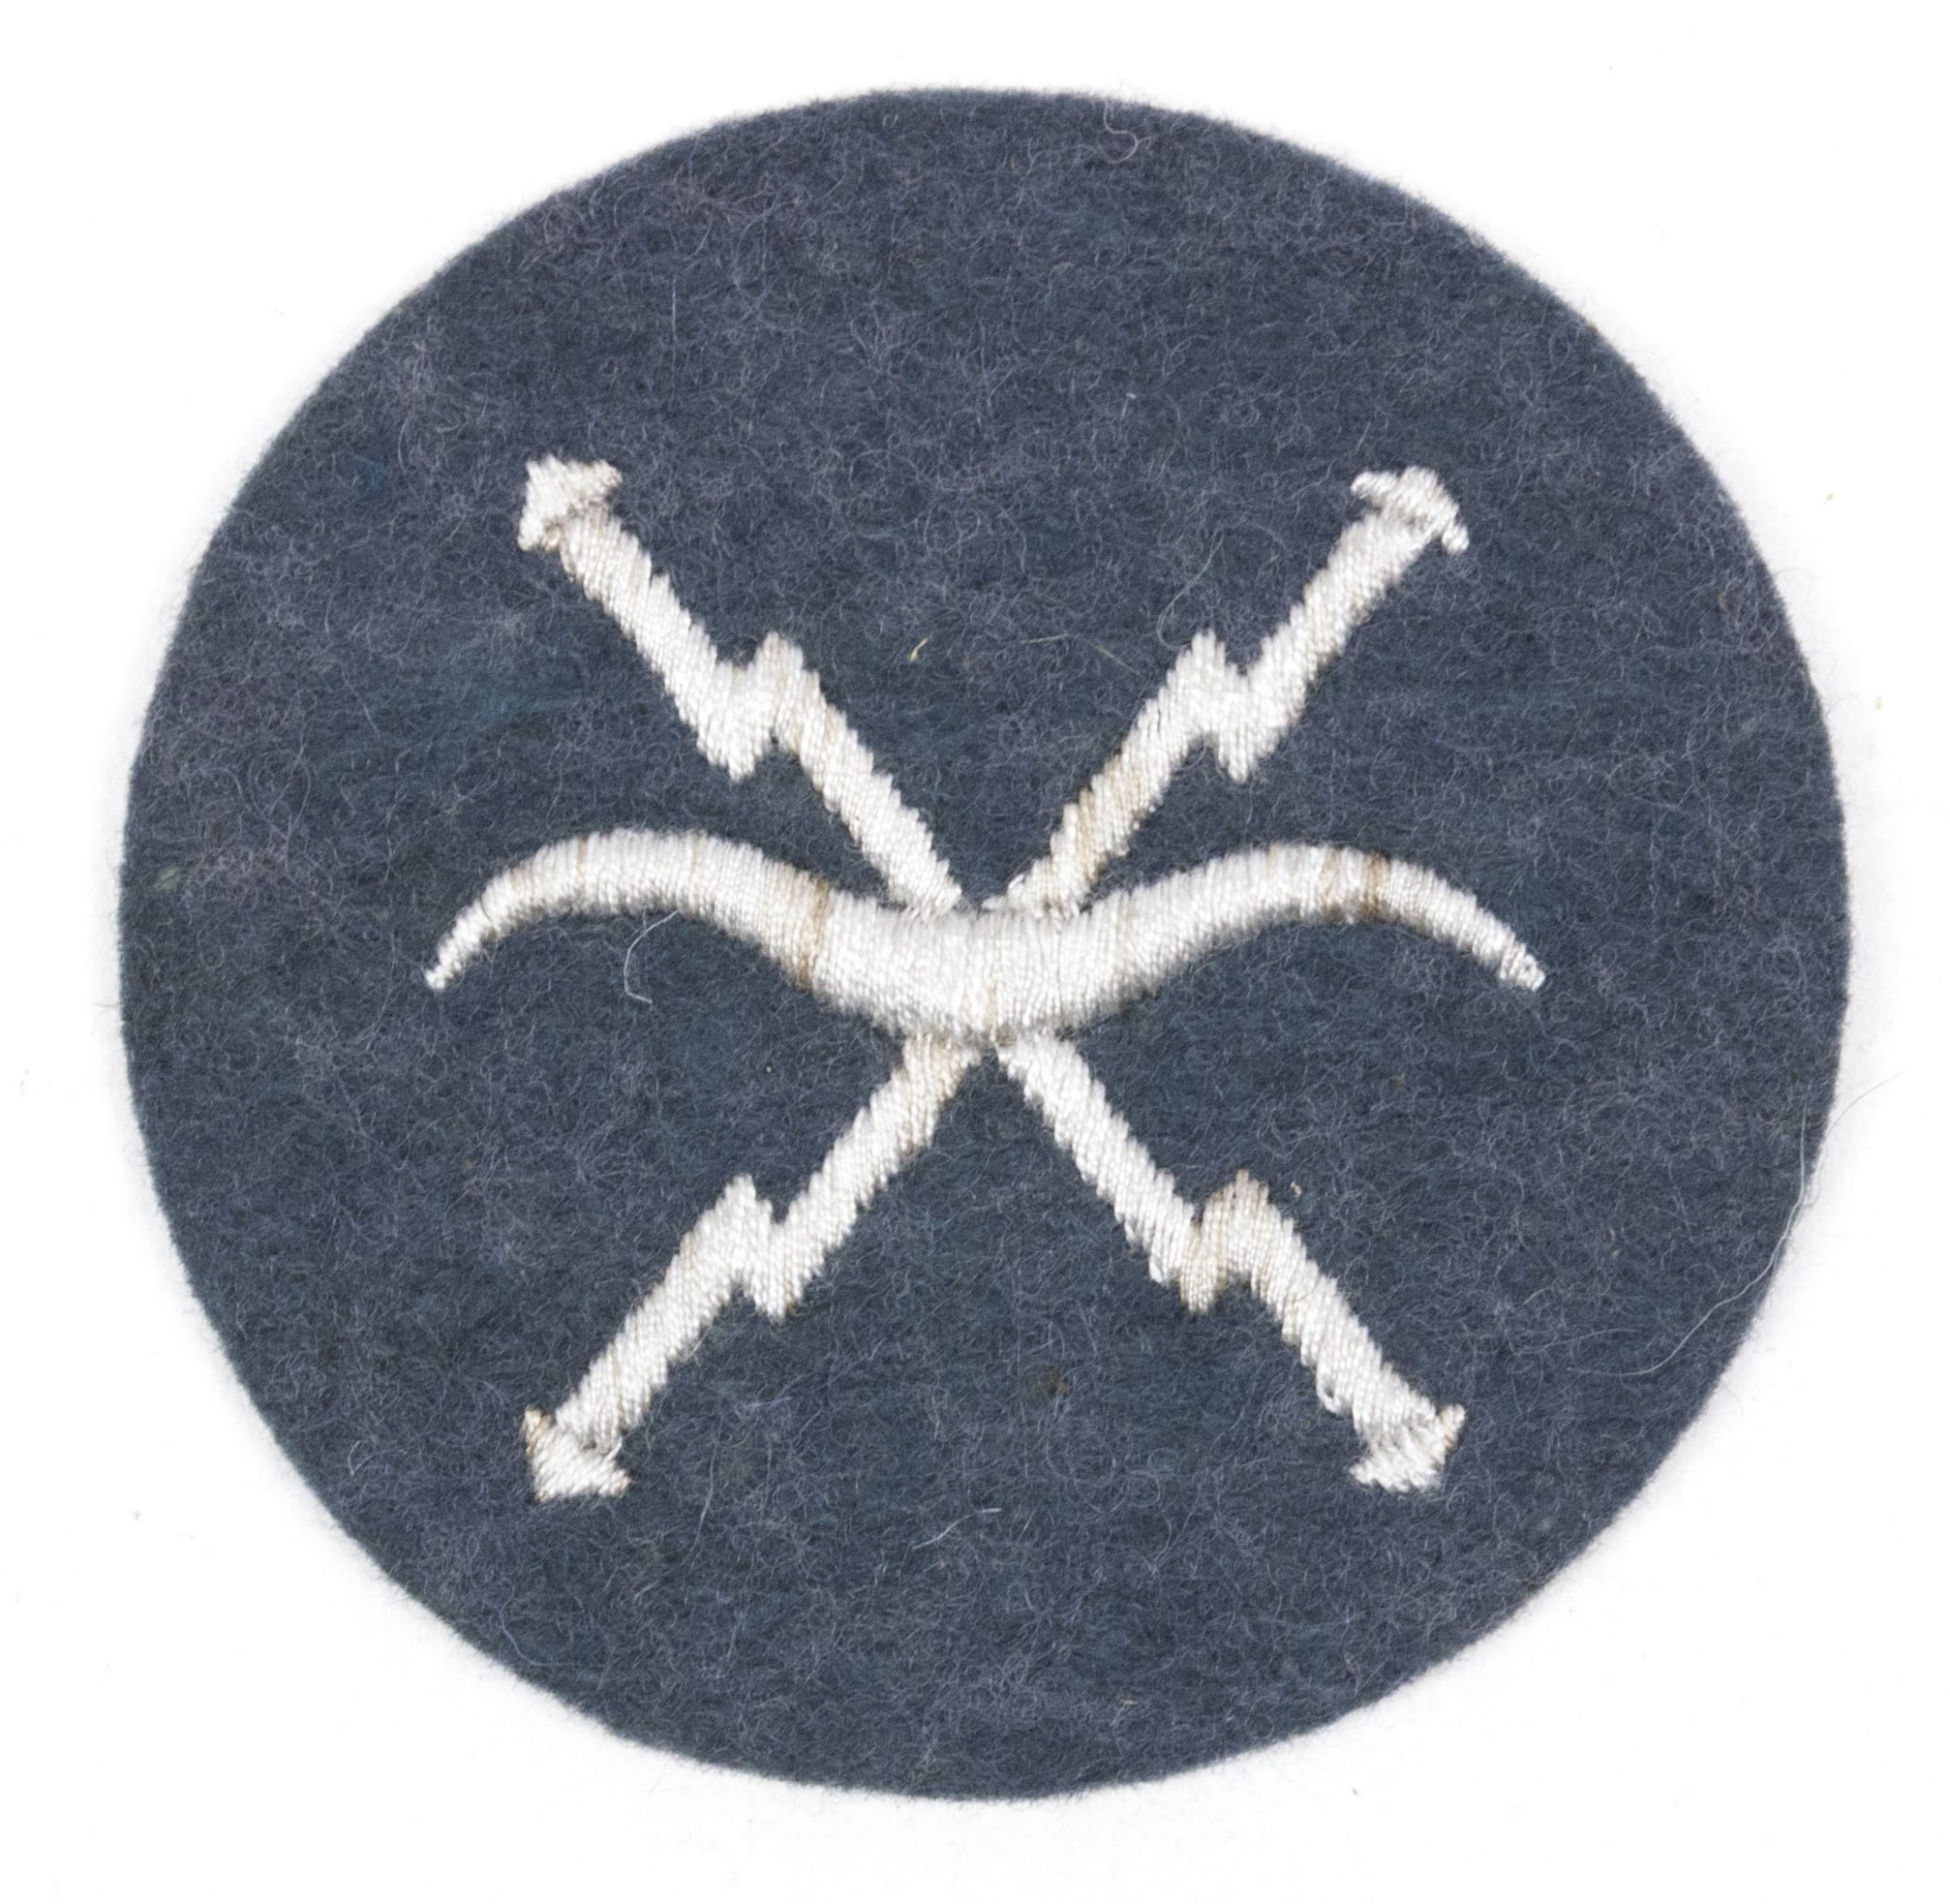 Luftwaffe Flugmeldepersonal Trade Badge